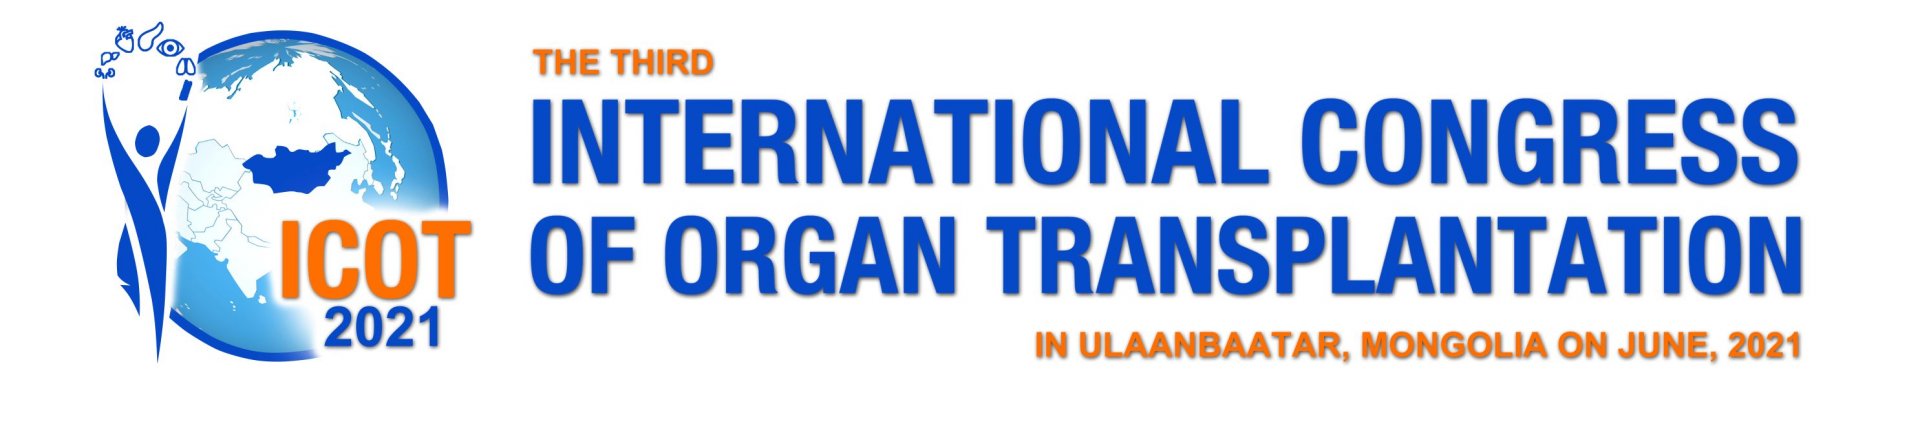 The Third International Congress of Transplantation 2021 (ICOT-2021)  -  